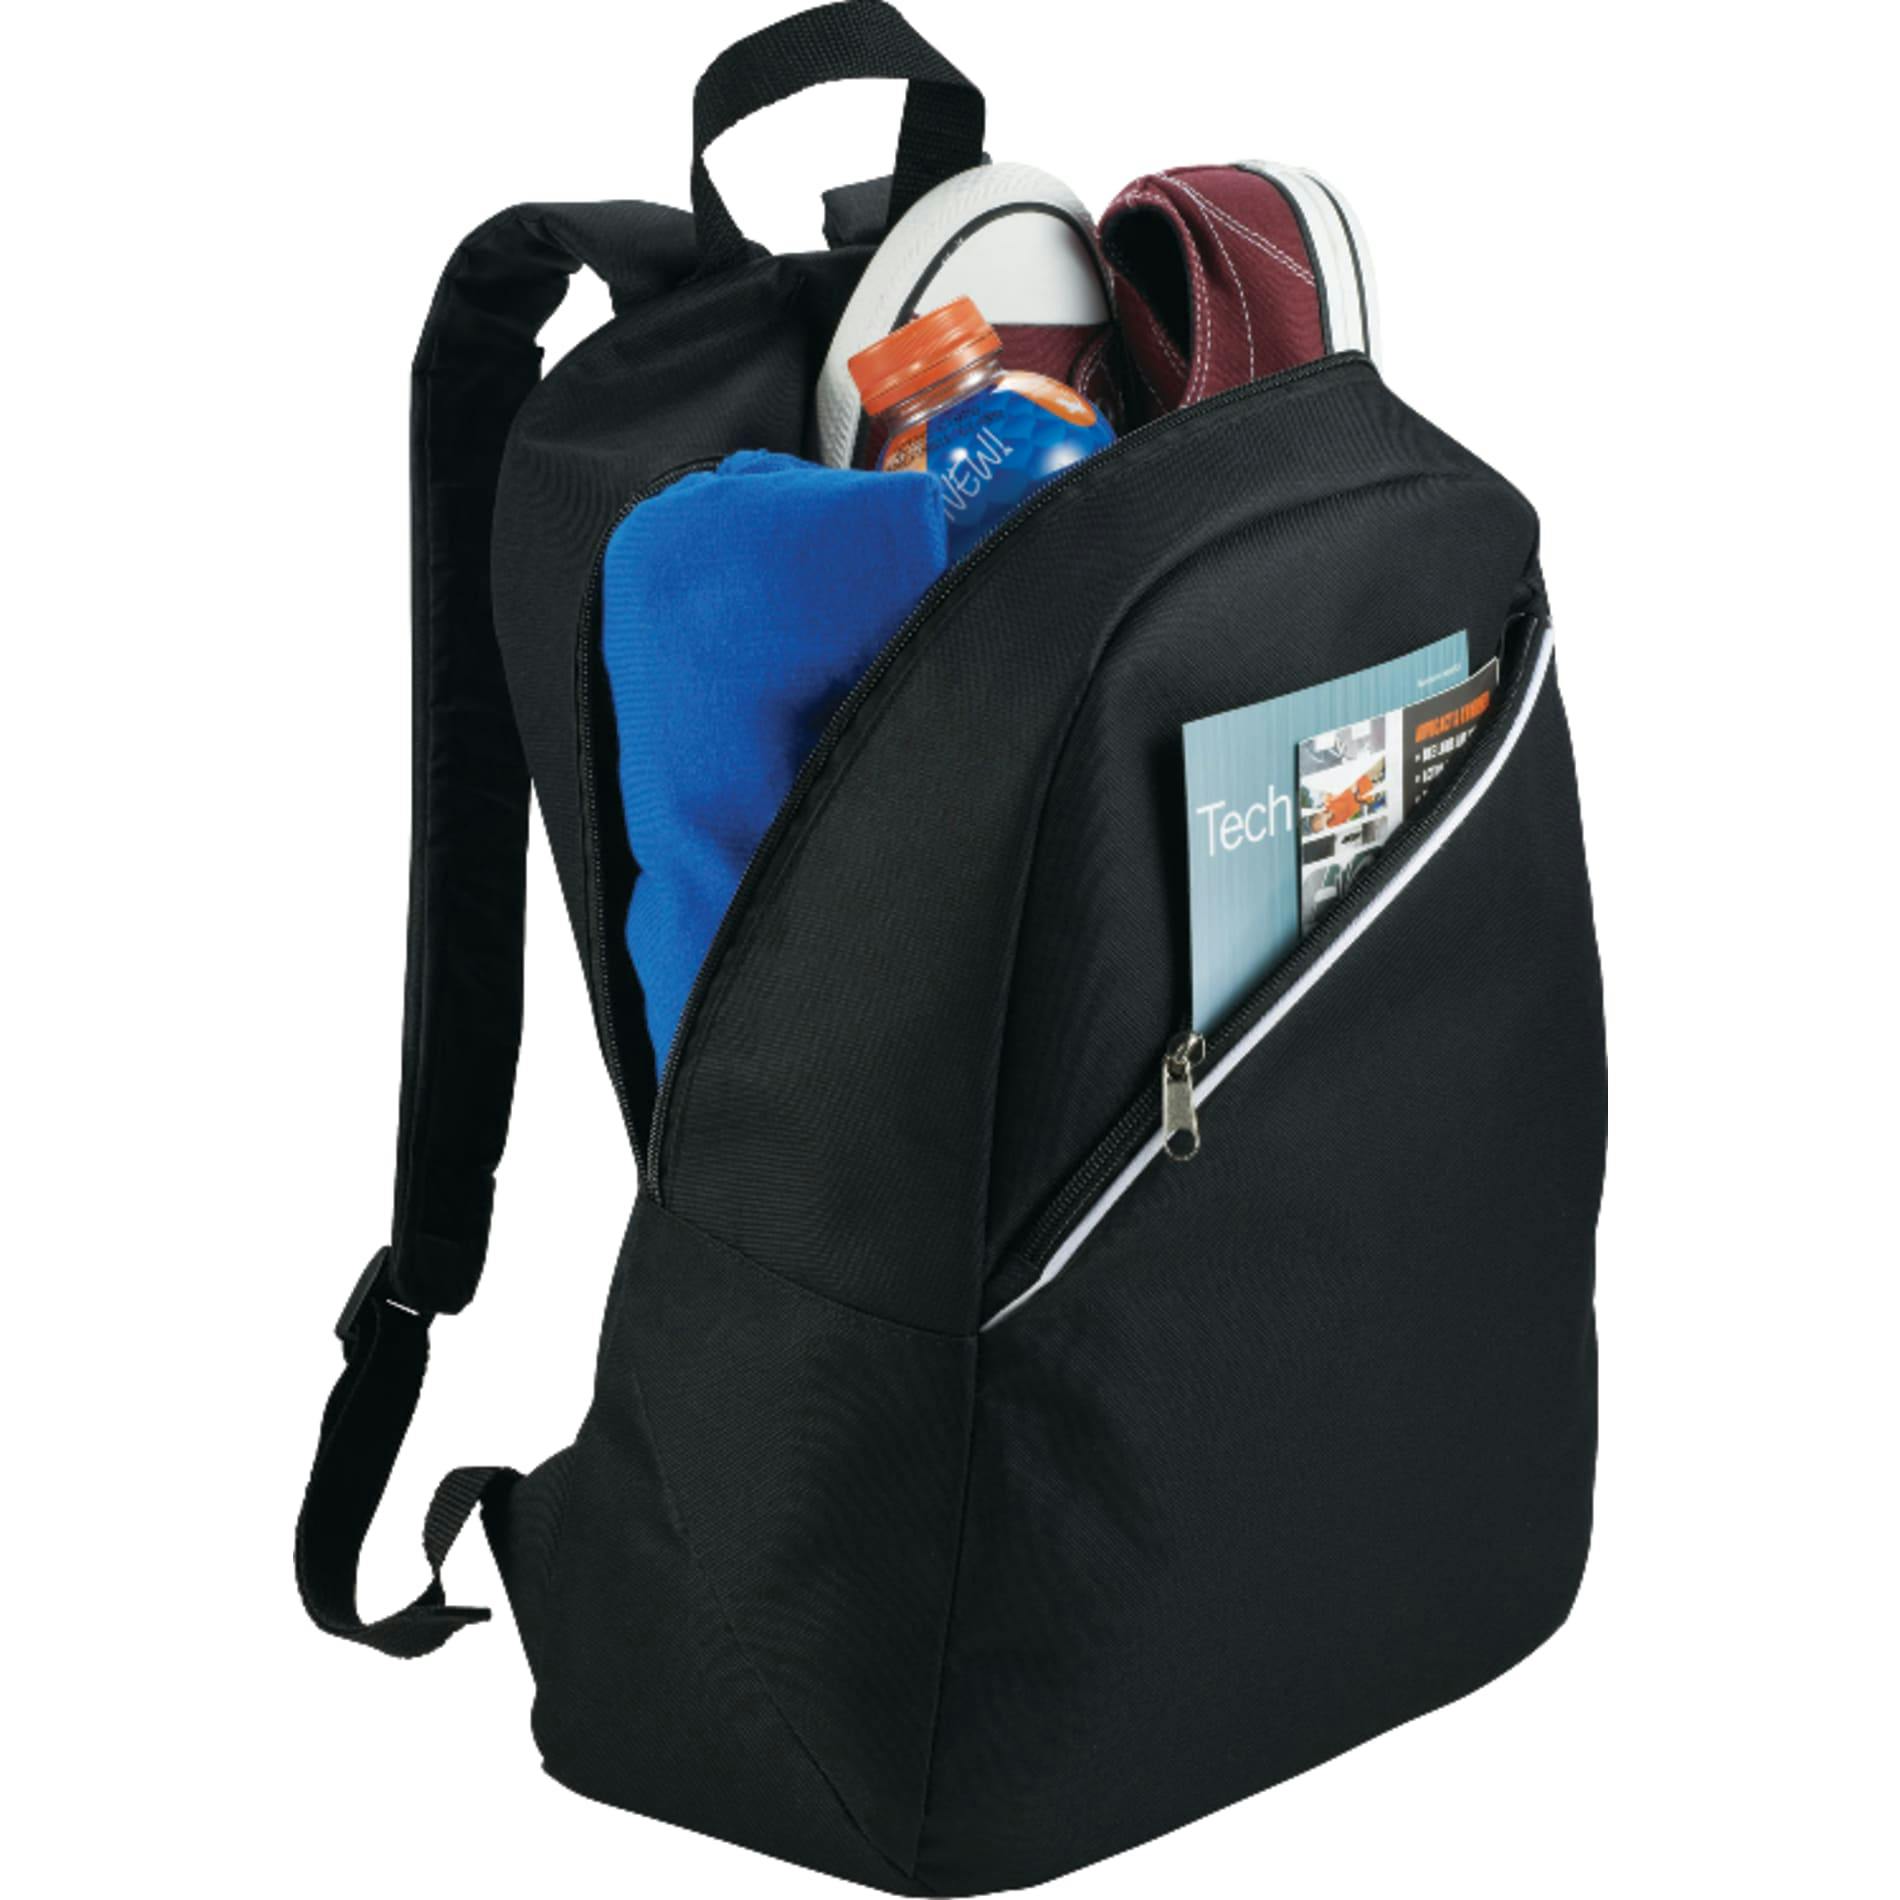 Arc Slim Backpack - additional Image 1